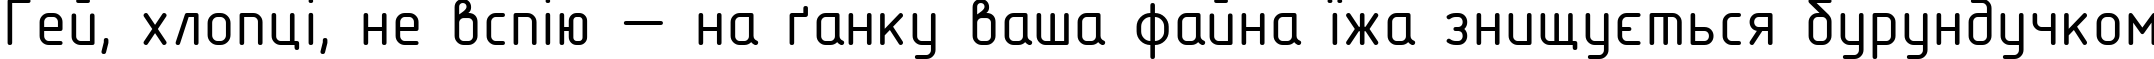 Пример написания шрифтом GOST Type BU текста на украинском